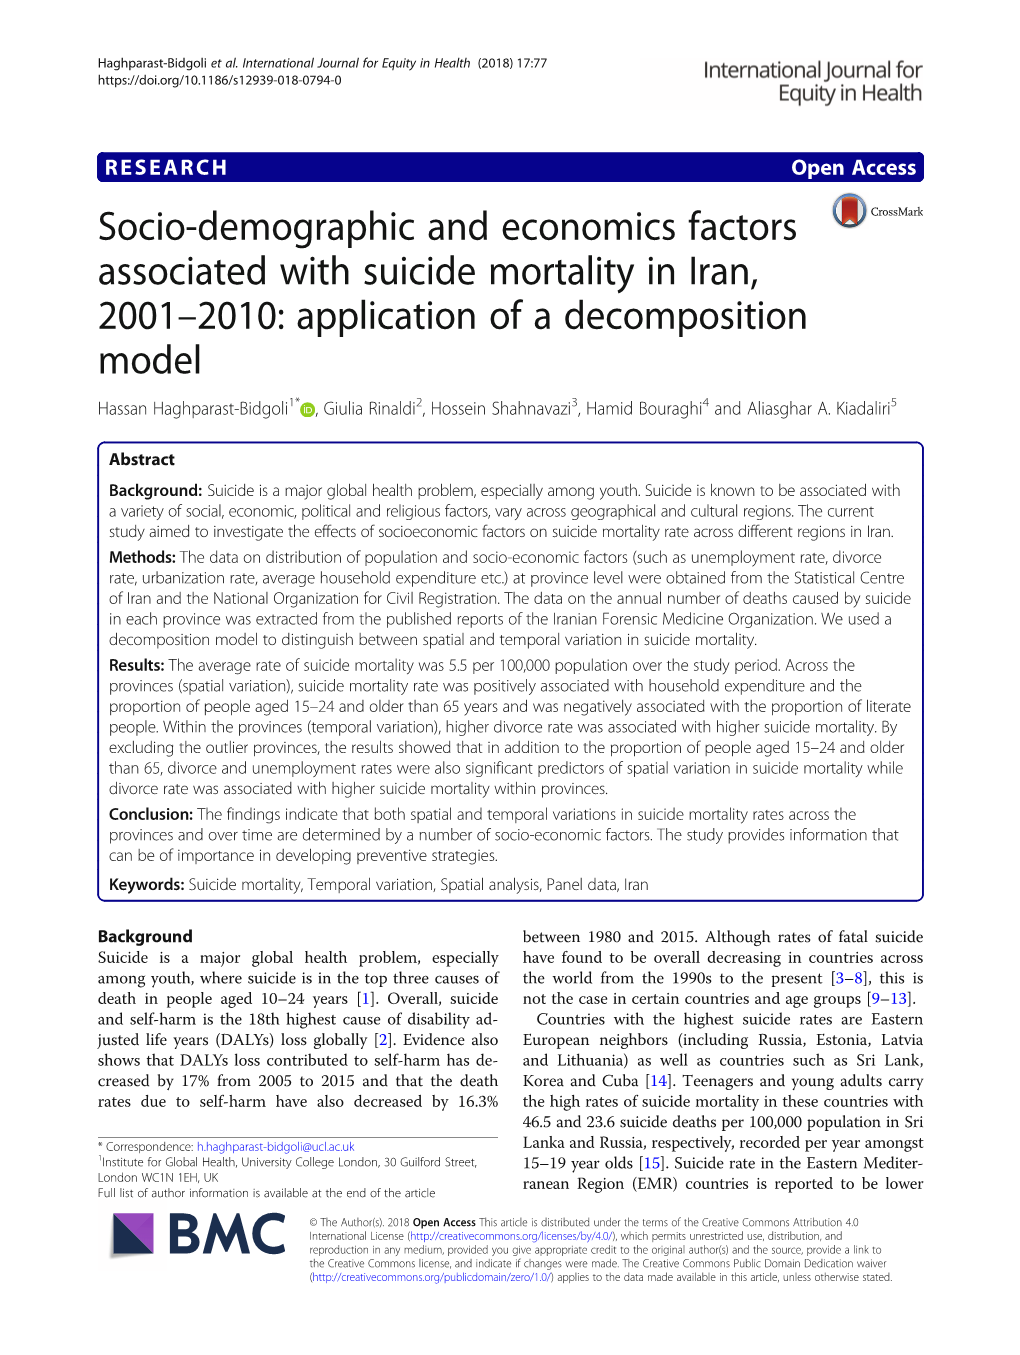 Socio-Demographic and Economics Factors Associated with Suicide